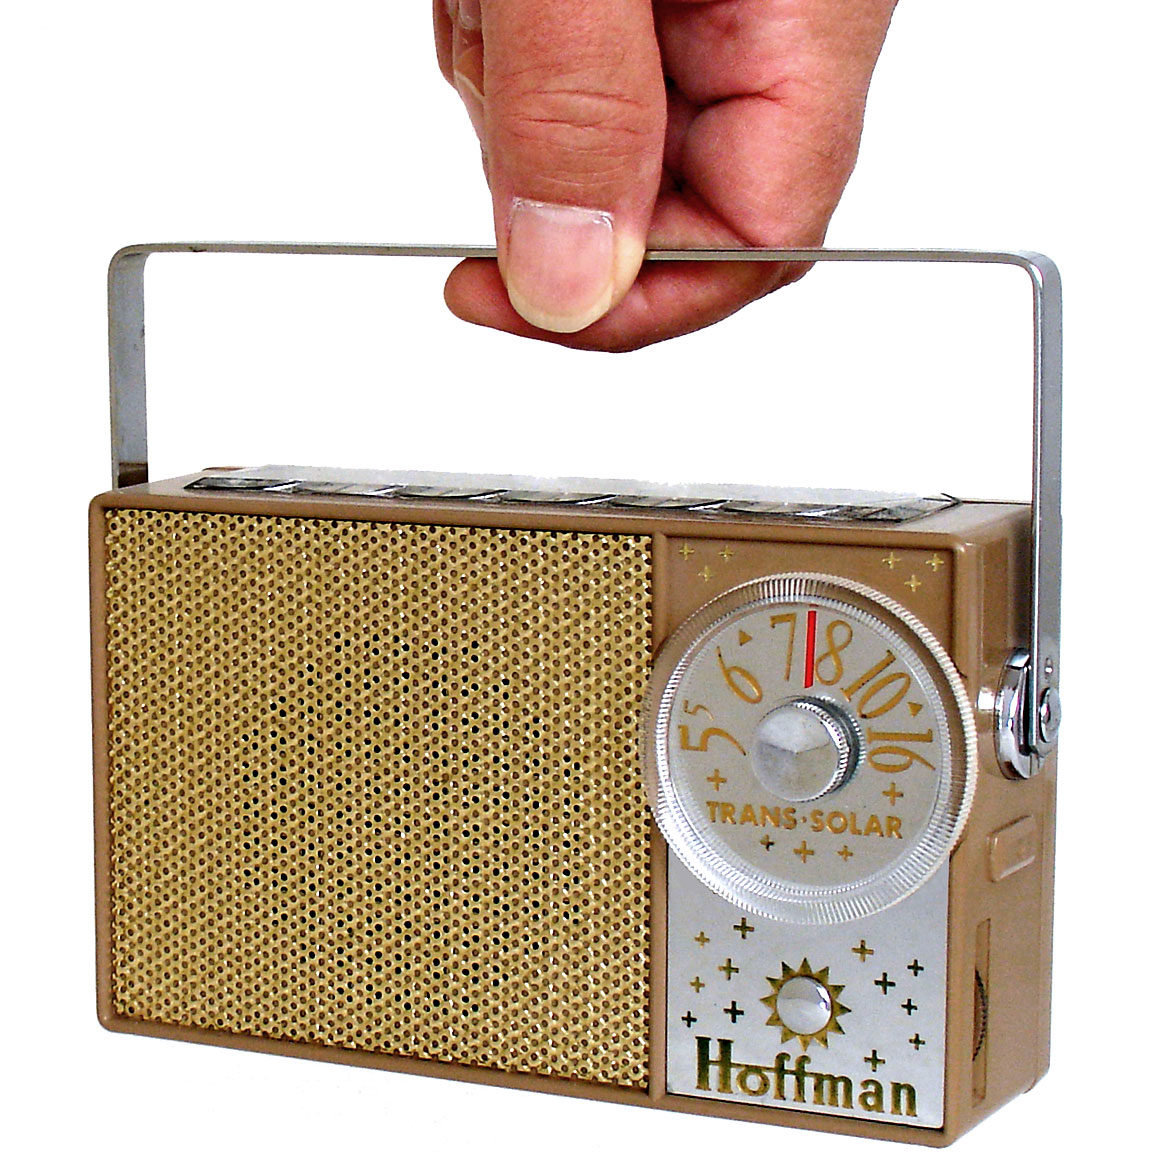 Hoffman Solar vintage transistor radio at www.collectornet.net/radio/pocket